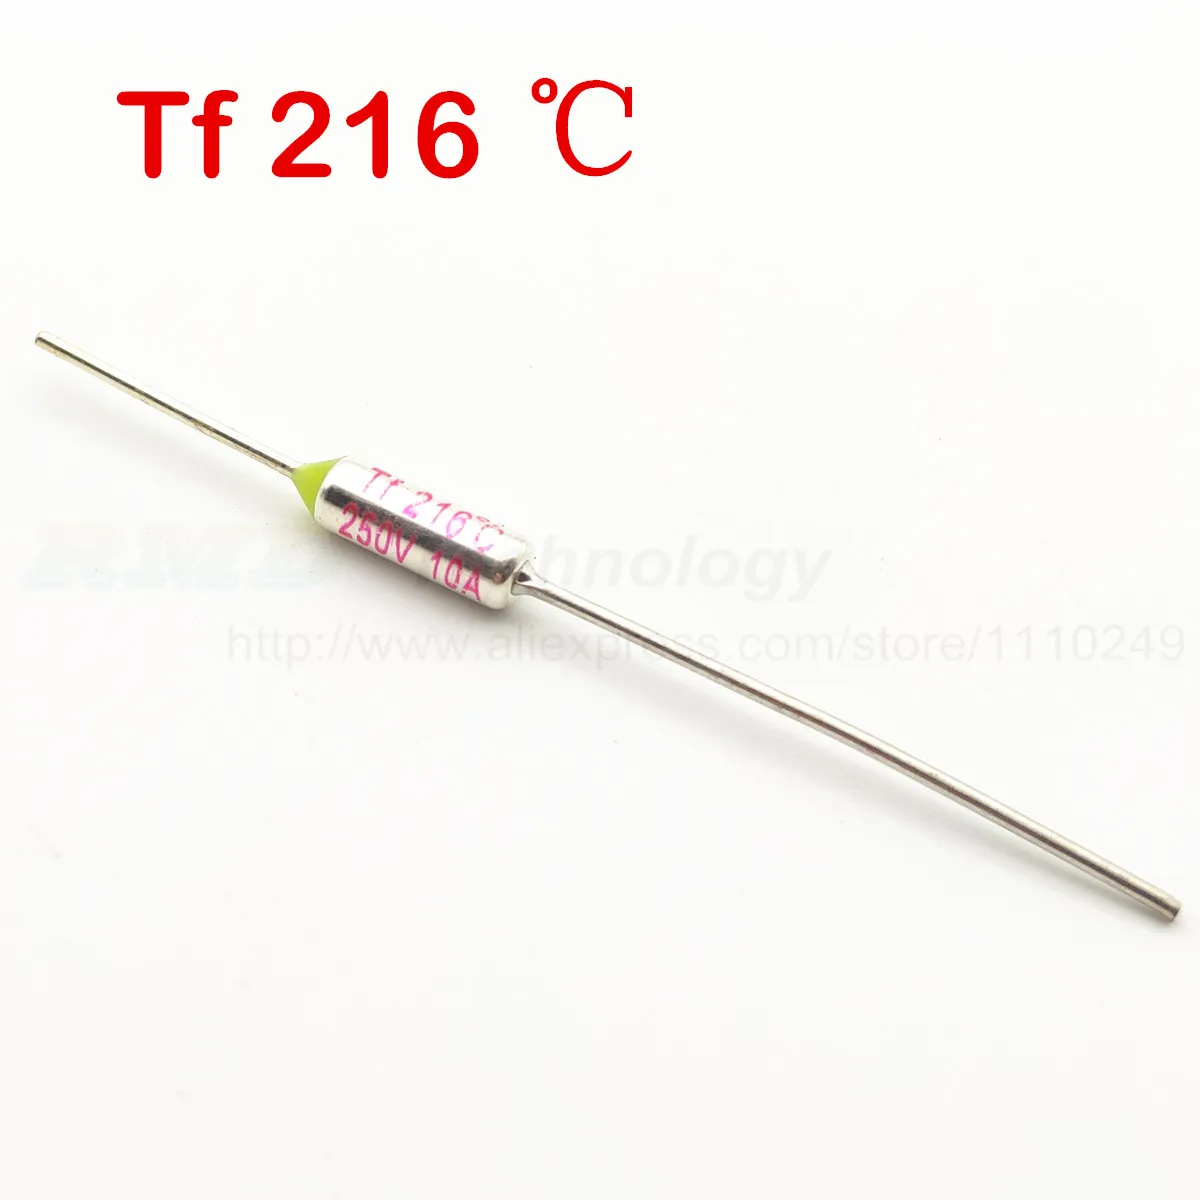 10 Pcs SF214E Cutoffs for  Thermal Fuse 216 C 216 Degree 10A 250V Celsius BH 